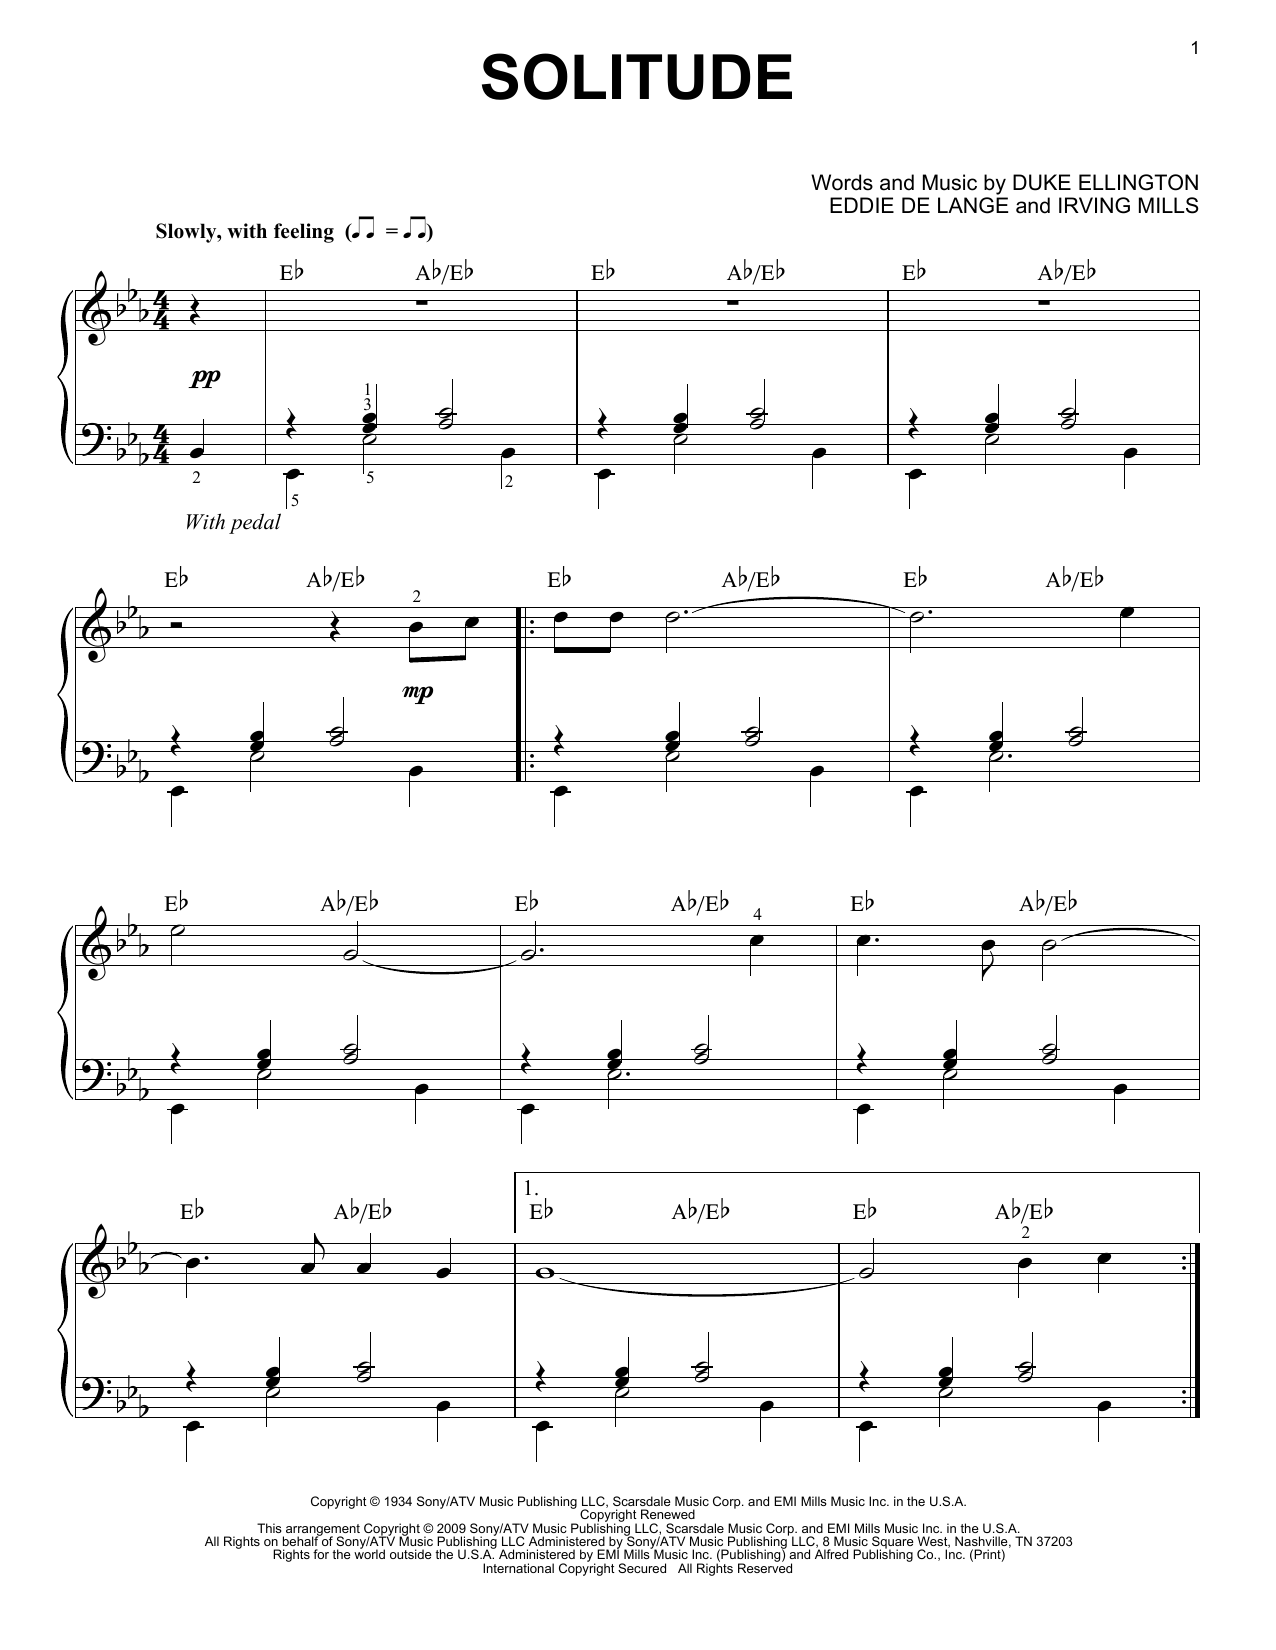 Duke Ellington Solitude (arr. Brent Edstrom) Sheet Music Notes & Chords for Piano - Download or Print PDF